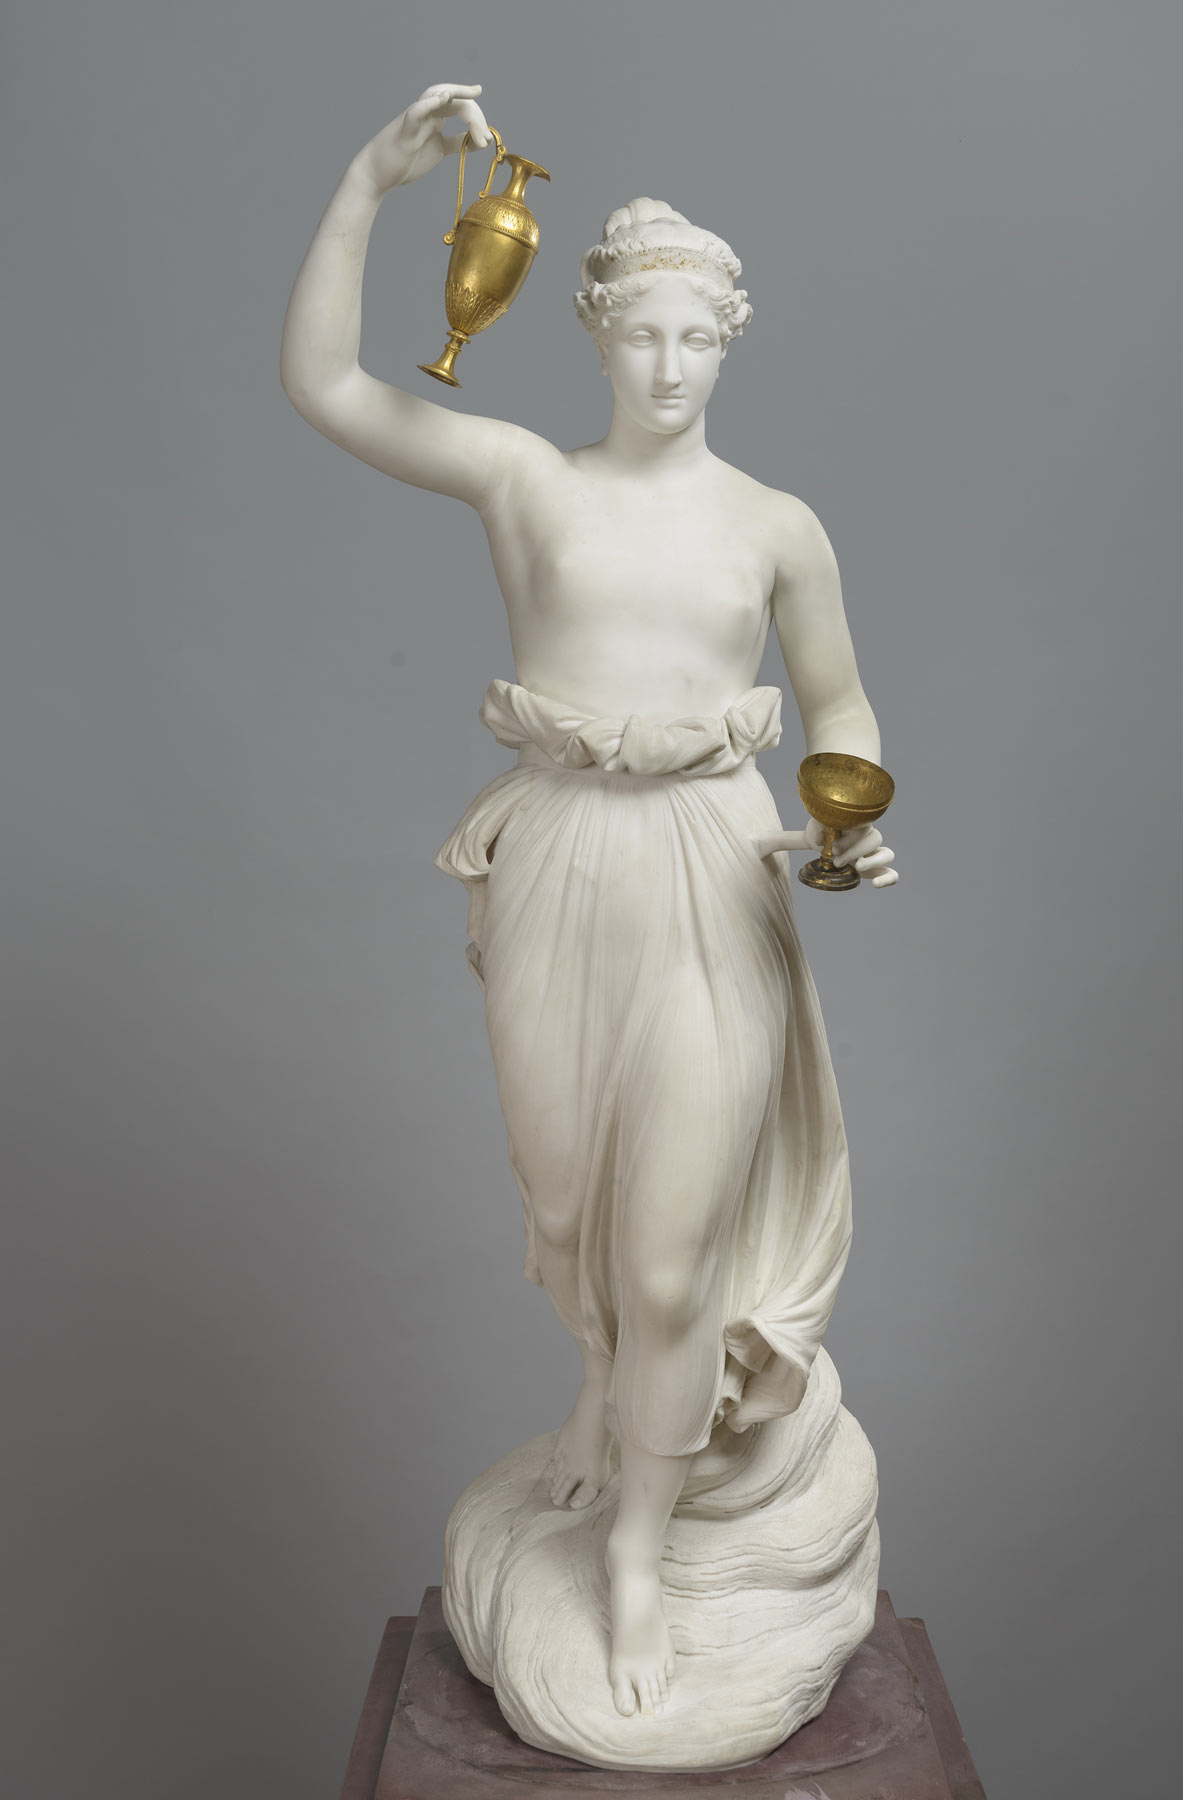 Antonio Canova, Ebe (1800-1805; marmo, 161 x 49 x 53,5 cm; San Pietroburgo, Museo Statale Ermitage, inv. 16)
